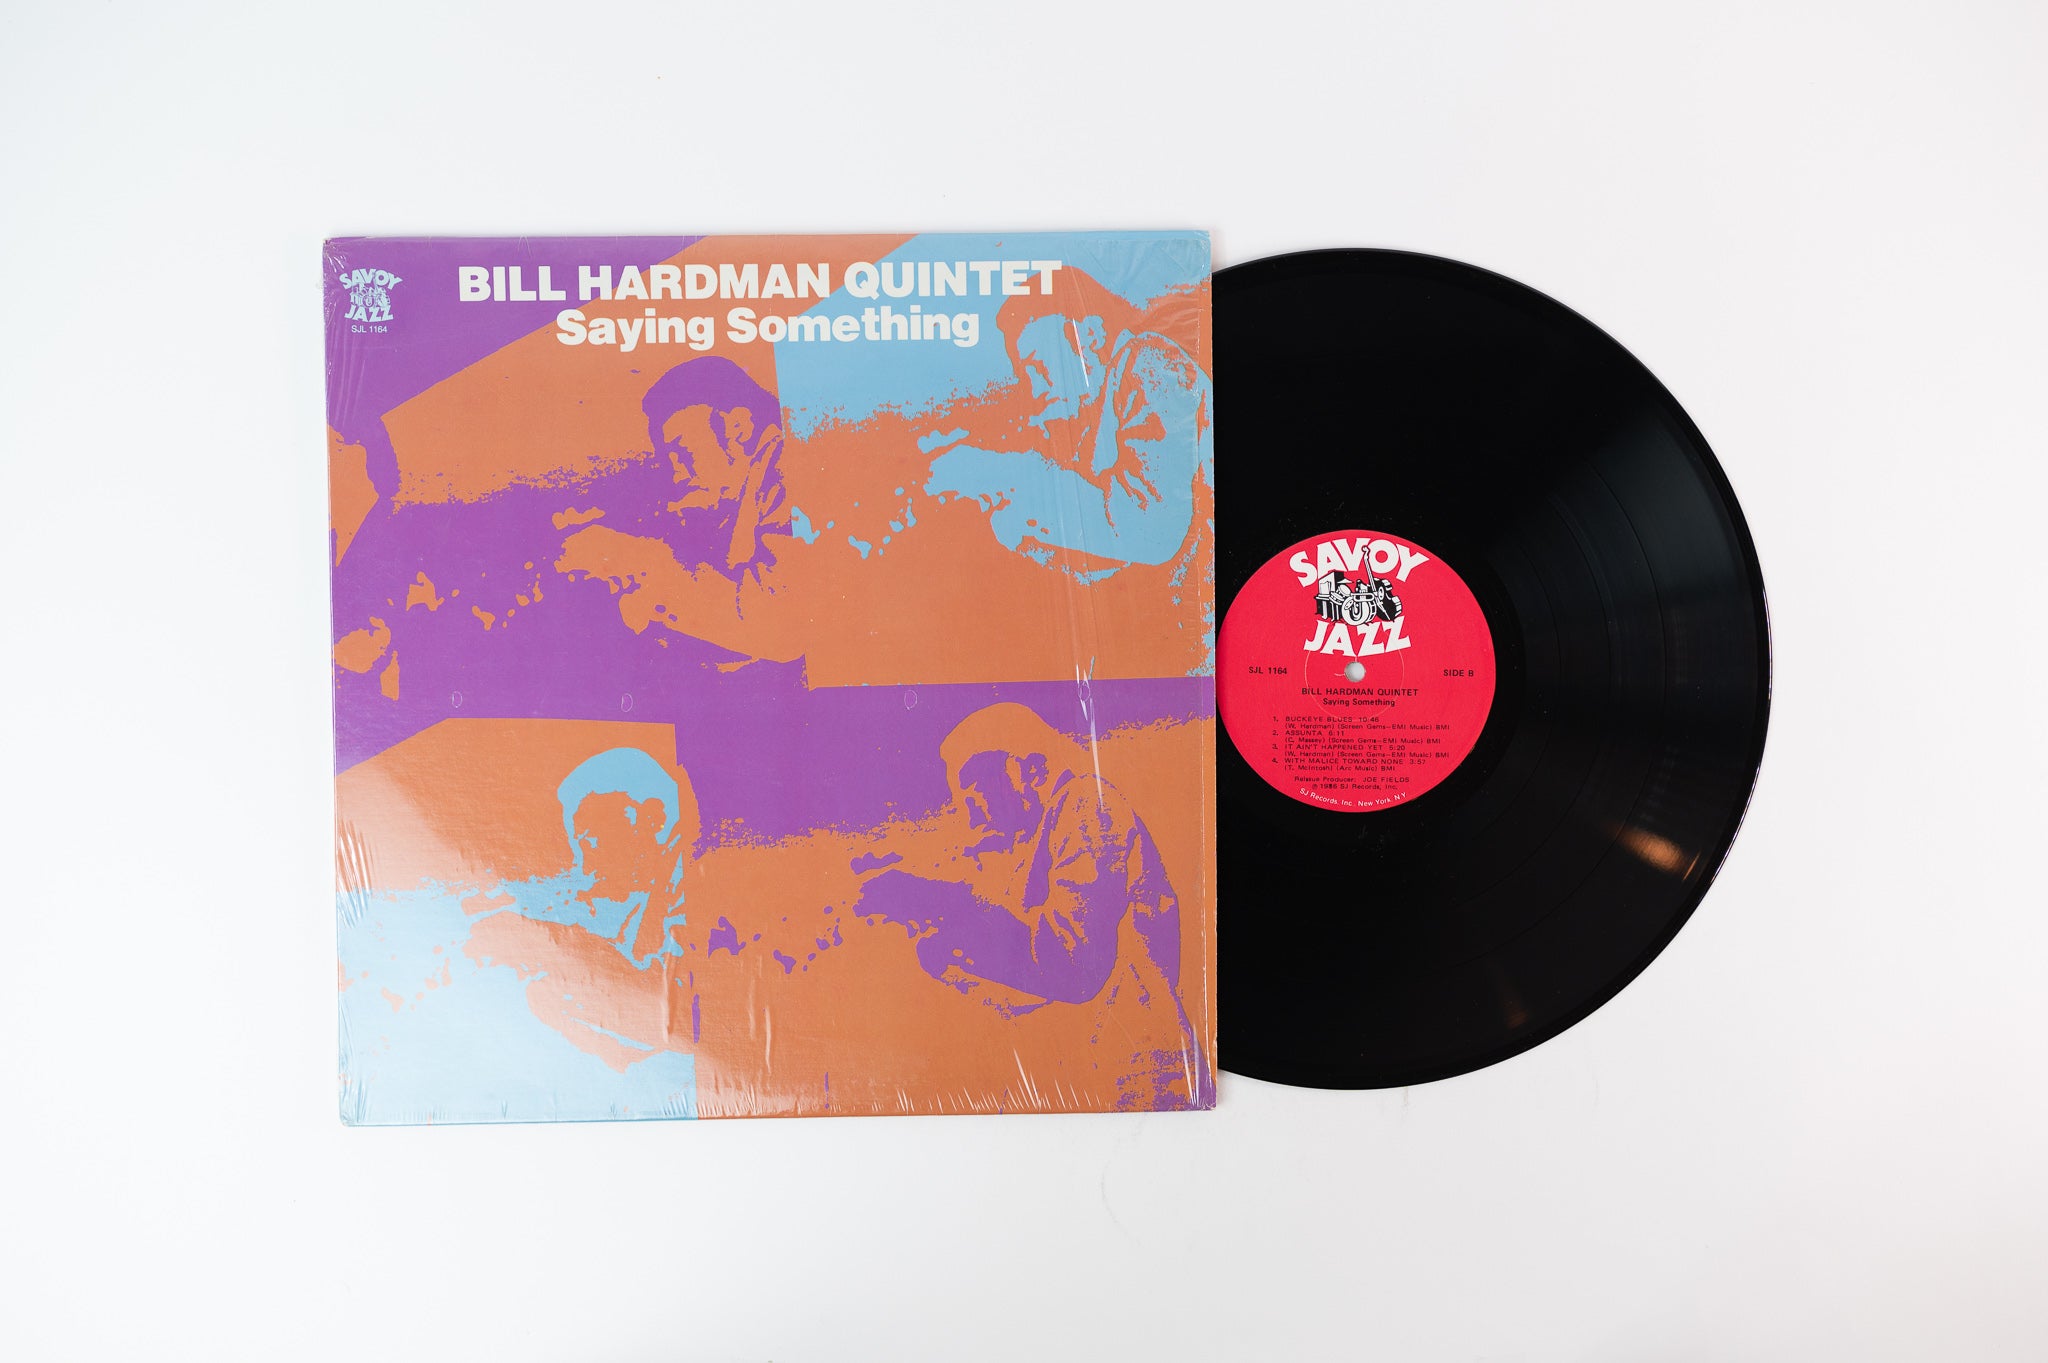 Bill Hardman Quintet – Saying Something on Savoy Jazz Reissue